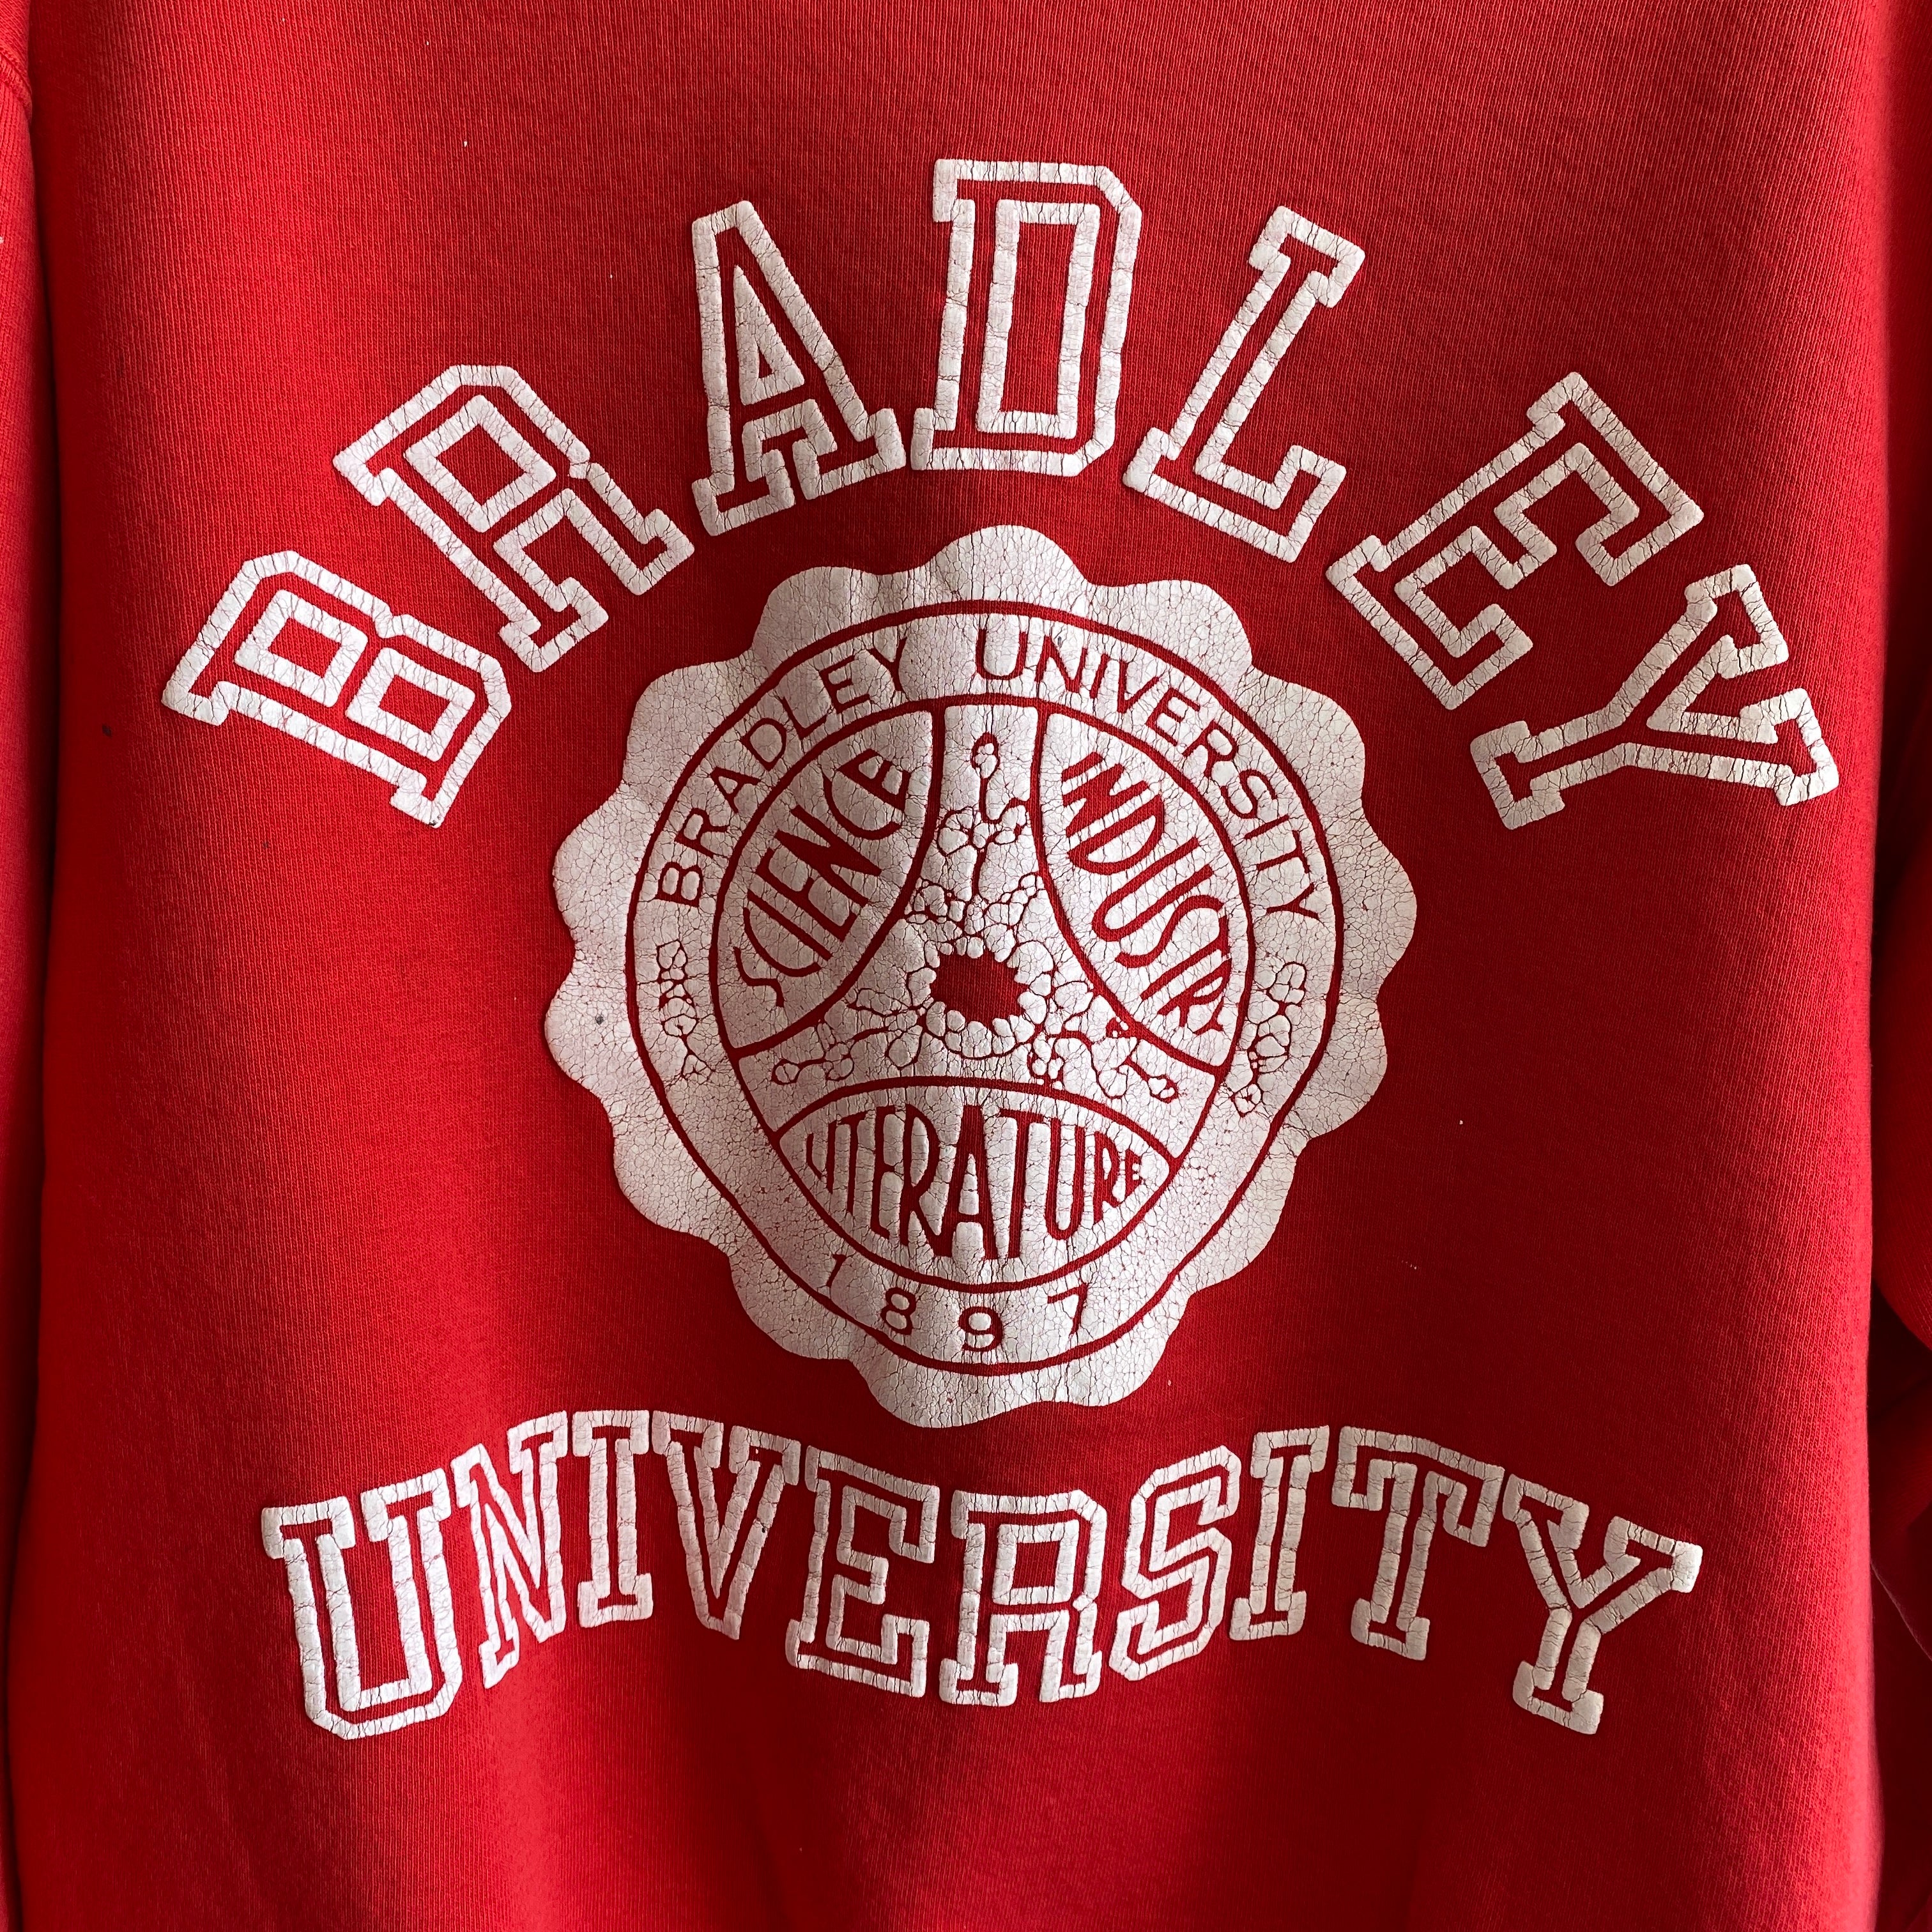 1980s RAD Bradley University Sweatshirt by Jansport